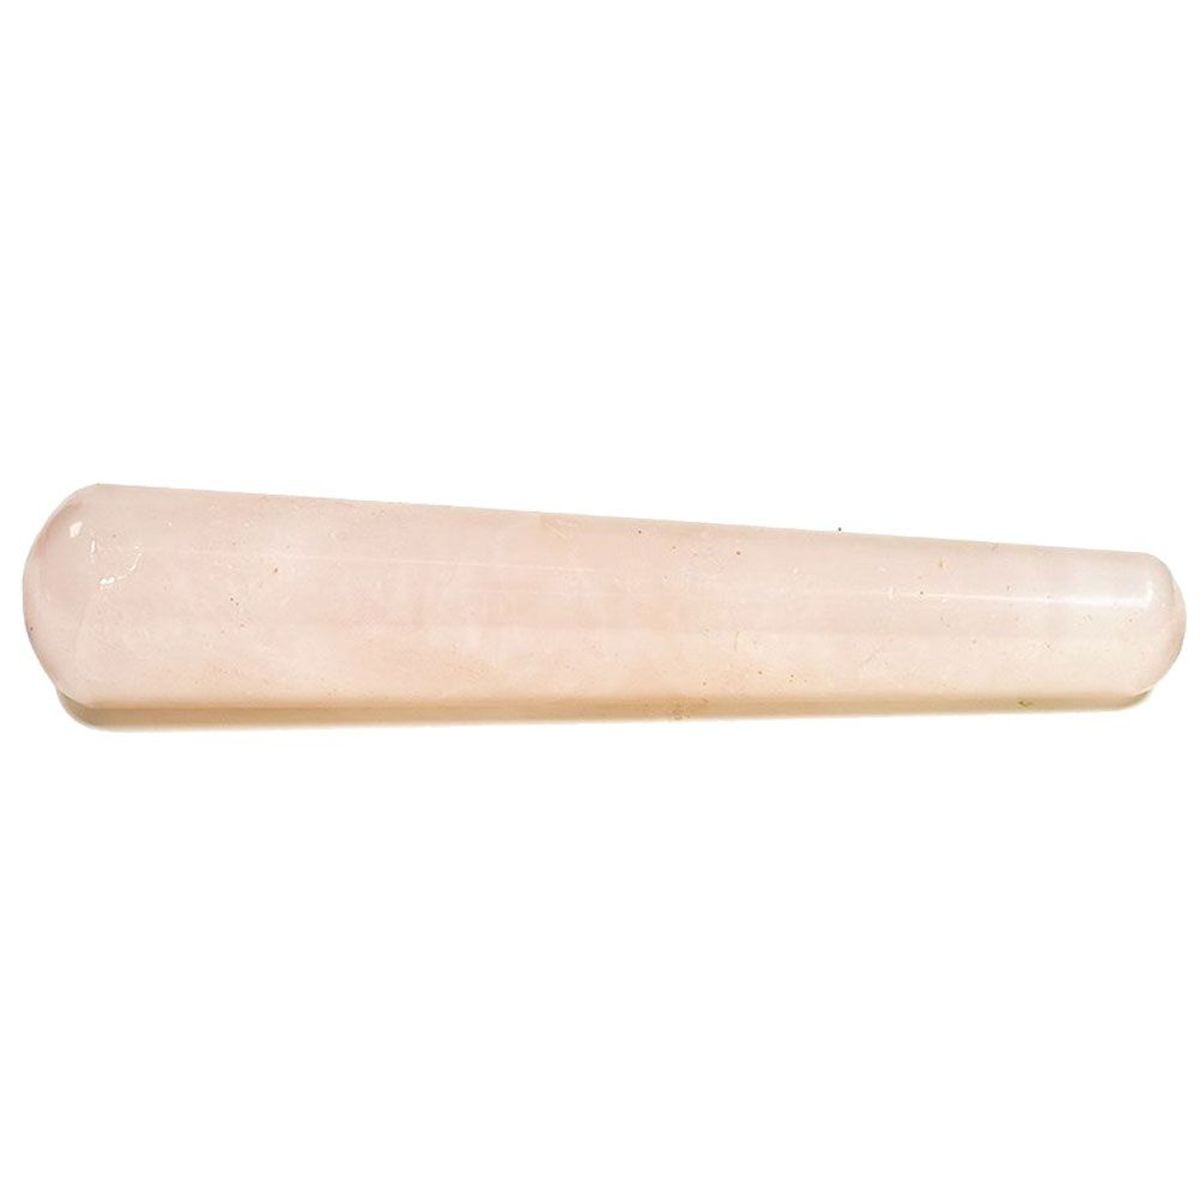 Bton de massage Quartz rose - 9 cm